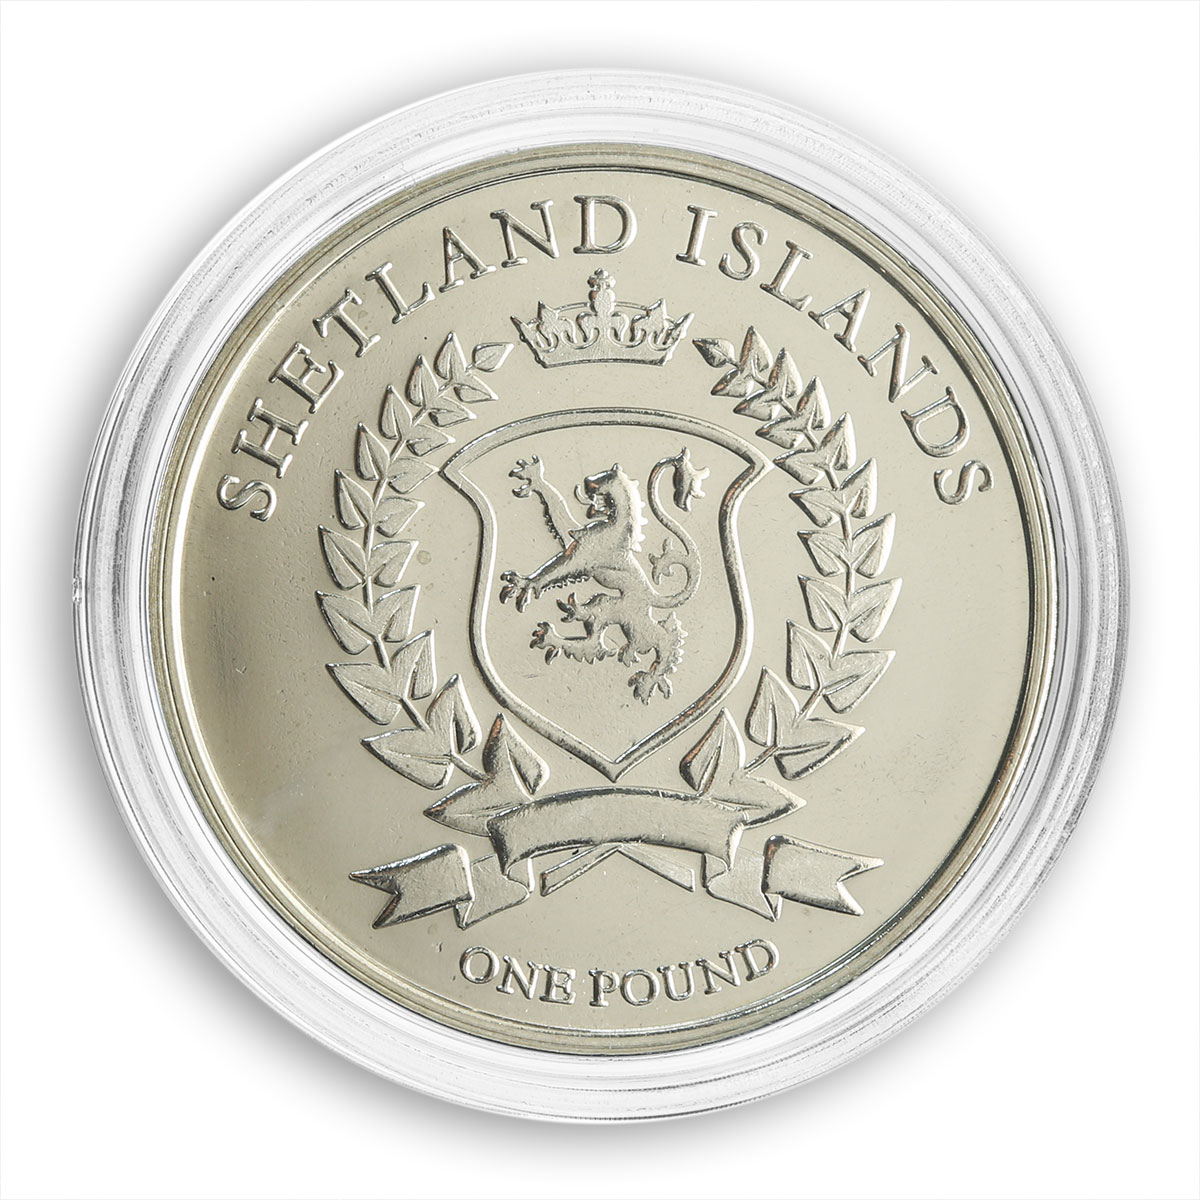 Shetland Islands, 1 pound, Halcyon Capensis, bird, fauna, nature, coin, 2015